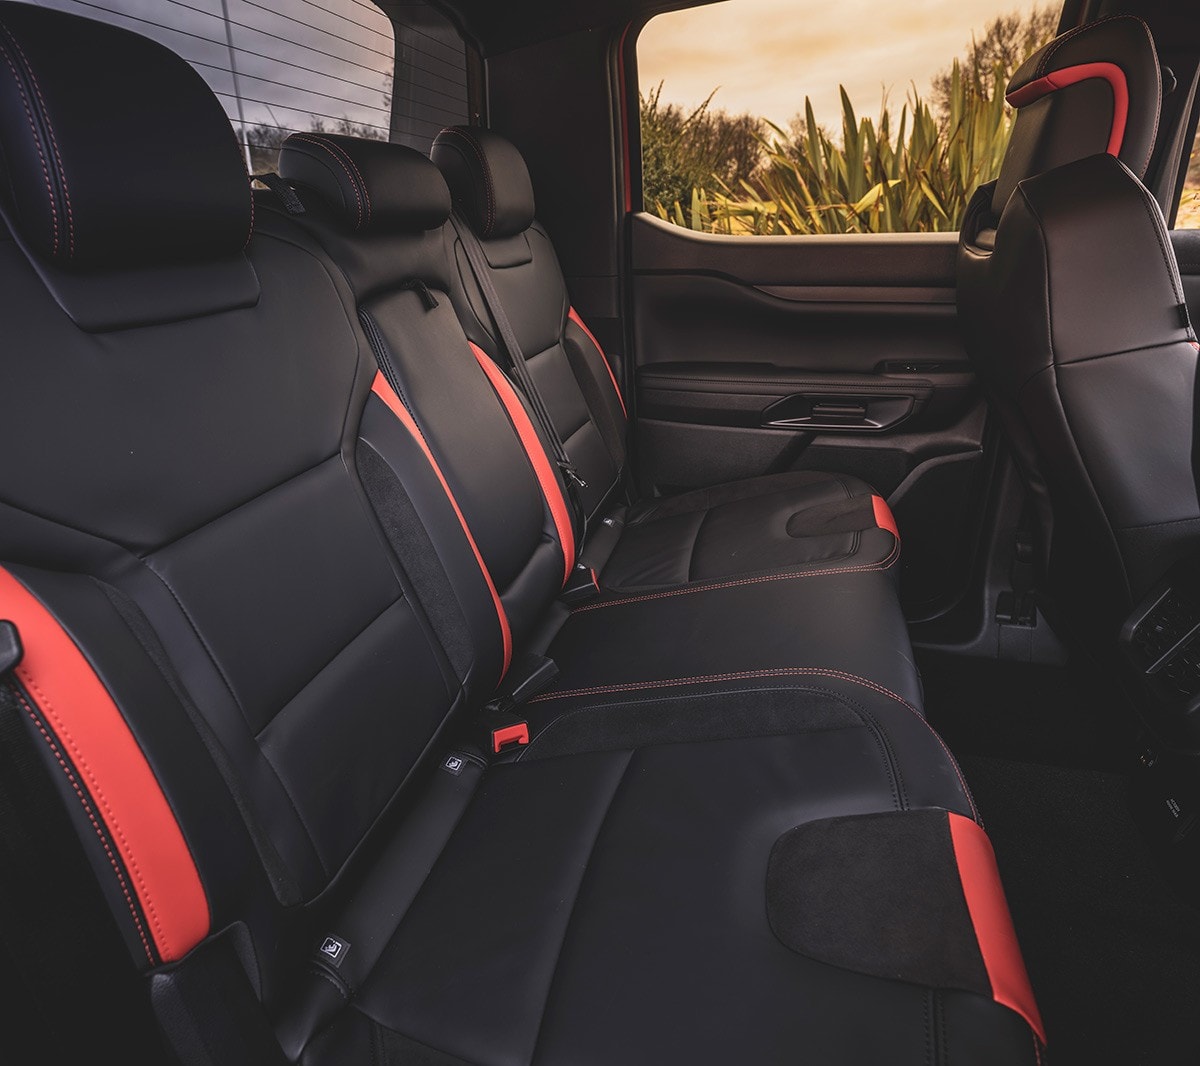 New Ford Ranger Raptor interior backseat view